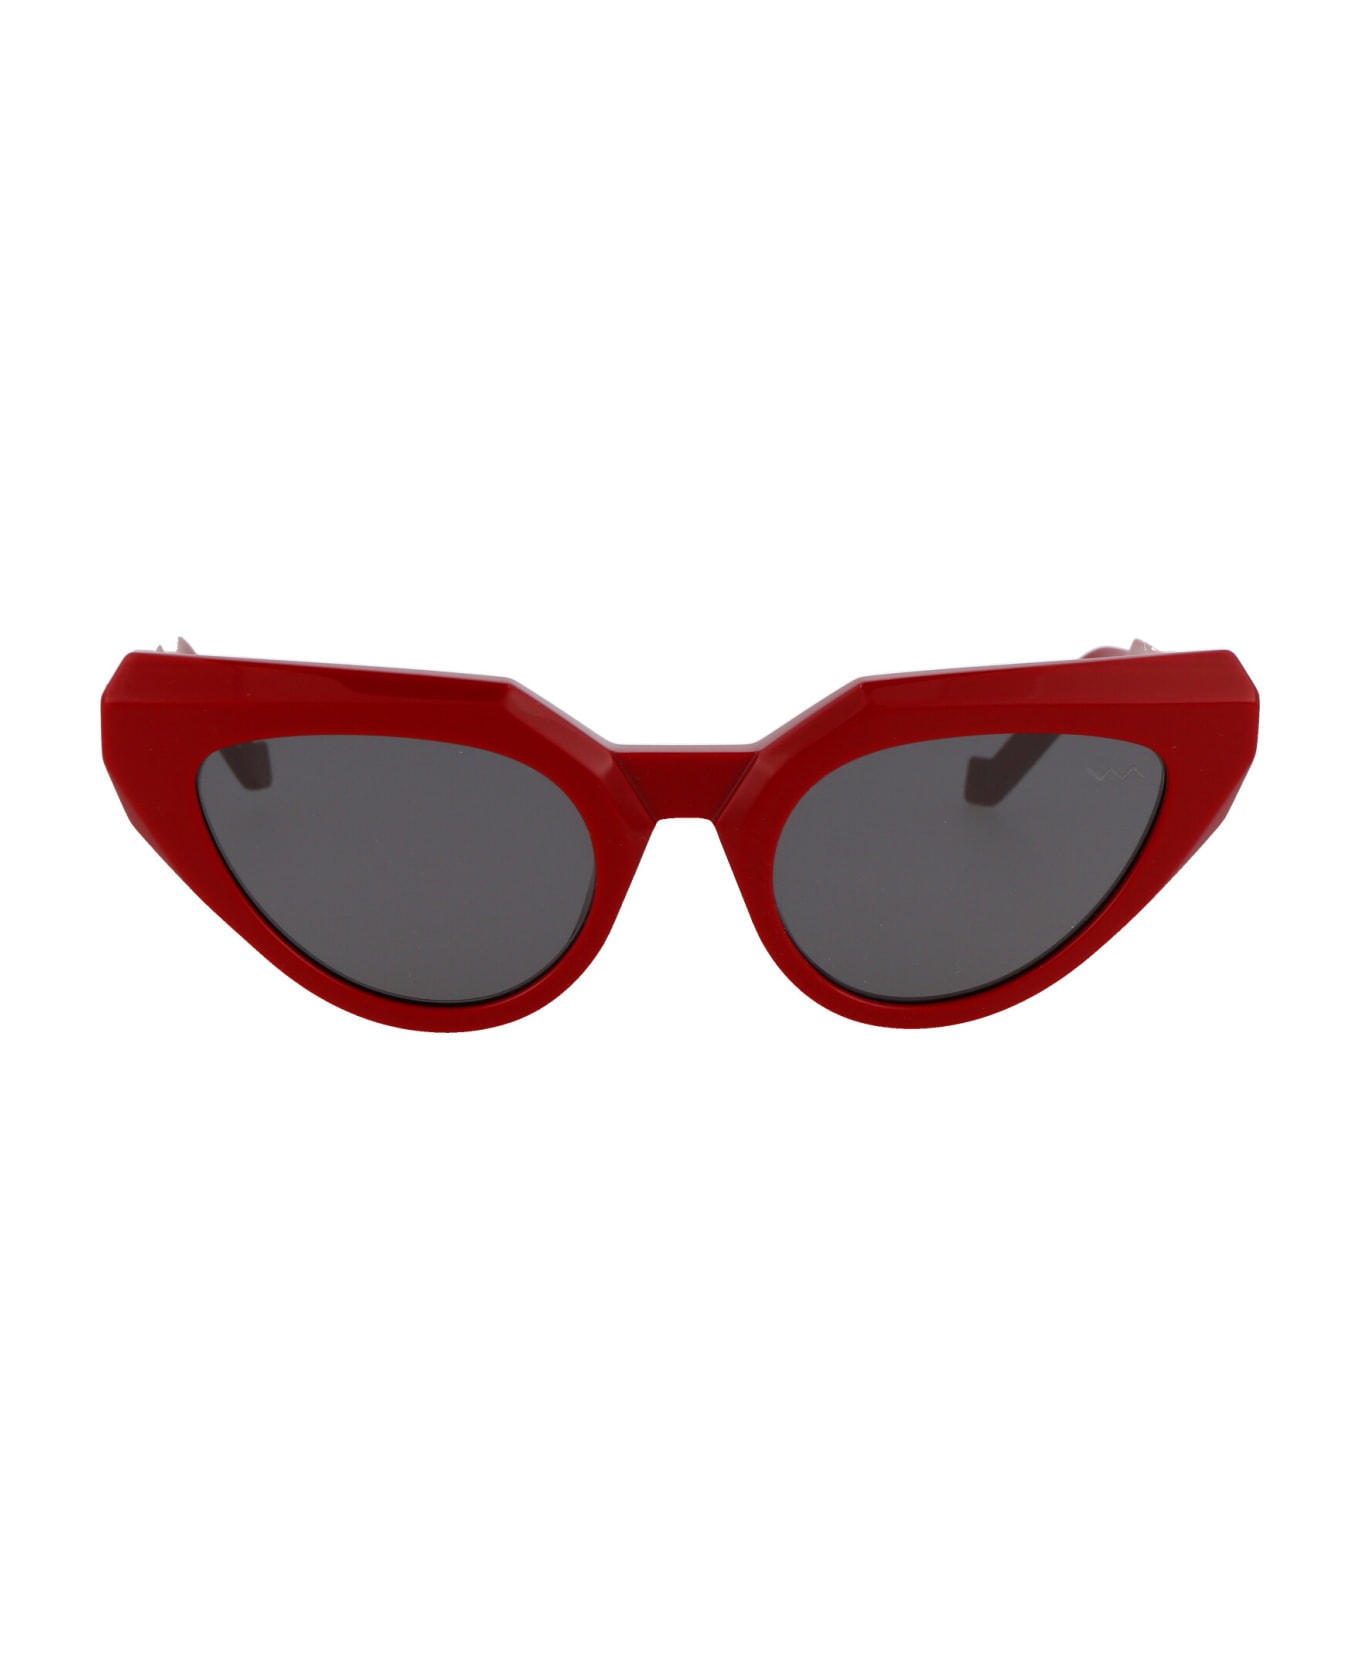 VAVA Bl0028 Sunglasses - RED|BLACK FLEX HINGES|BLACK LENSES